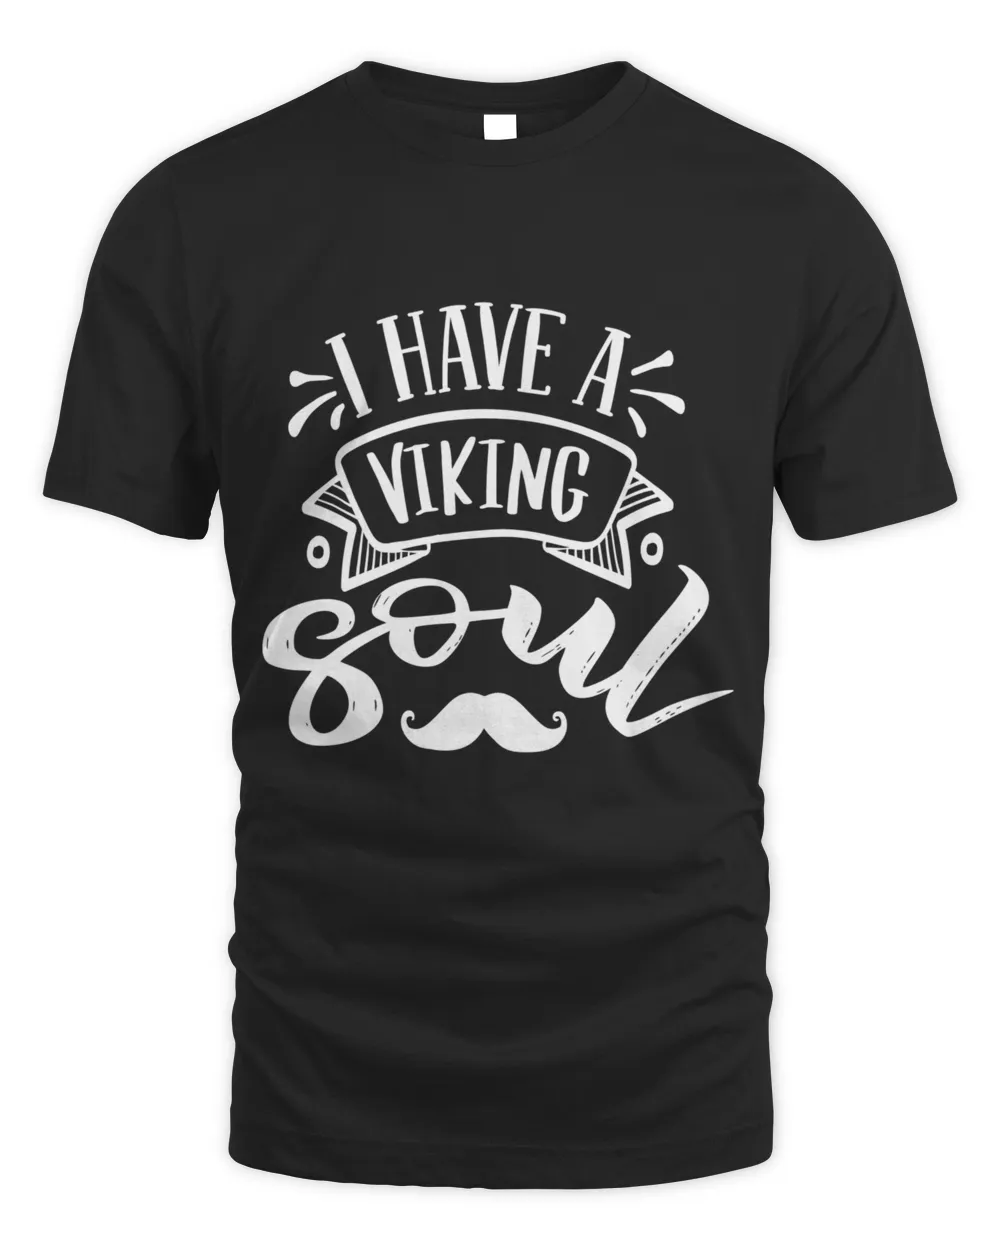 I have a viking soul